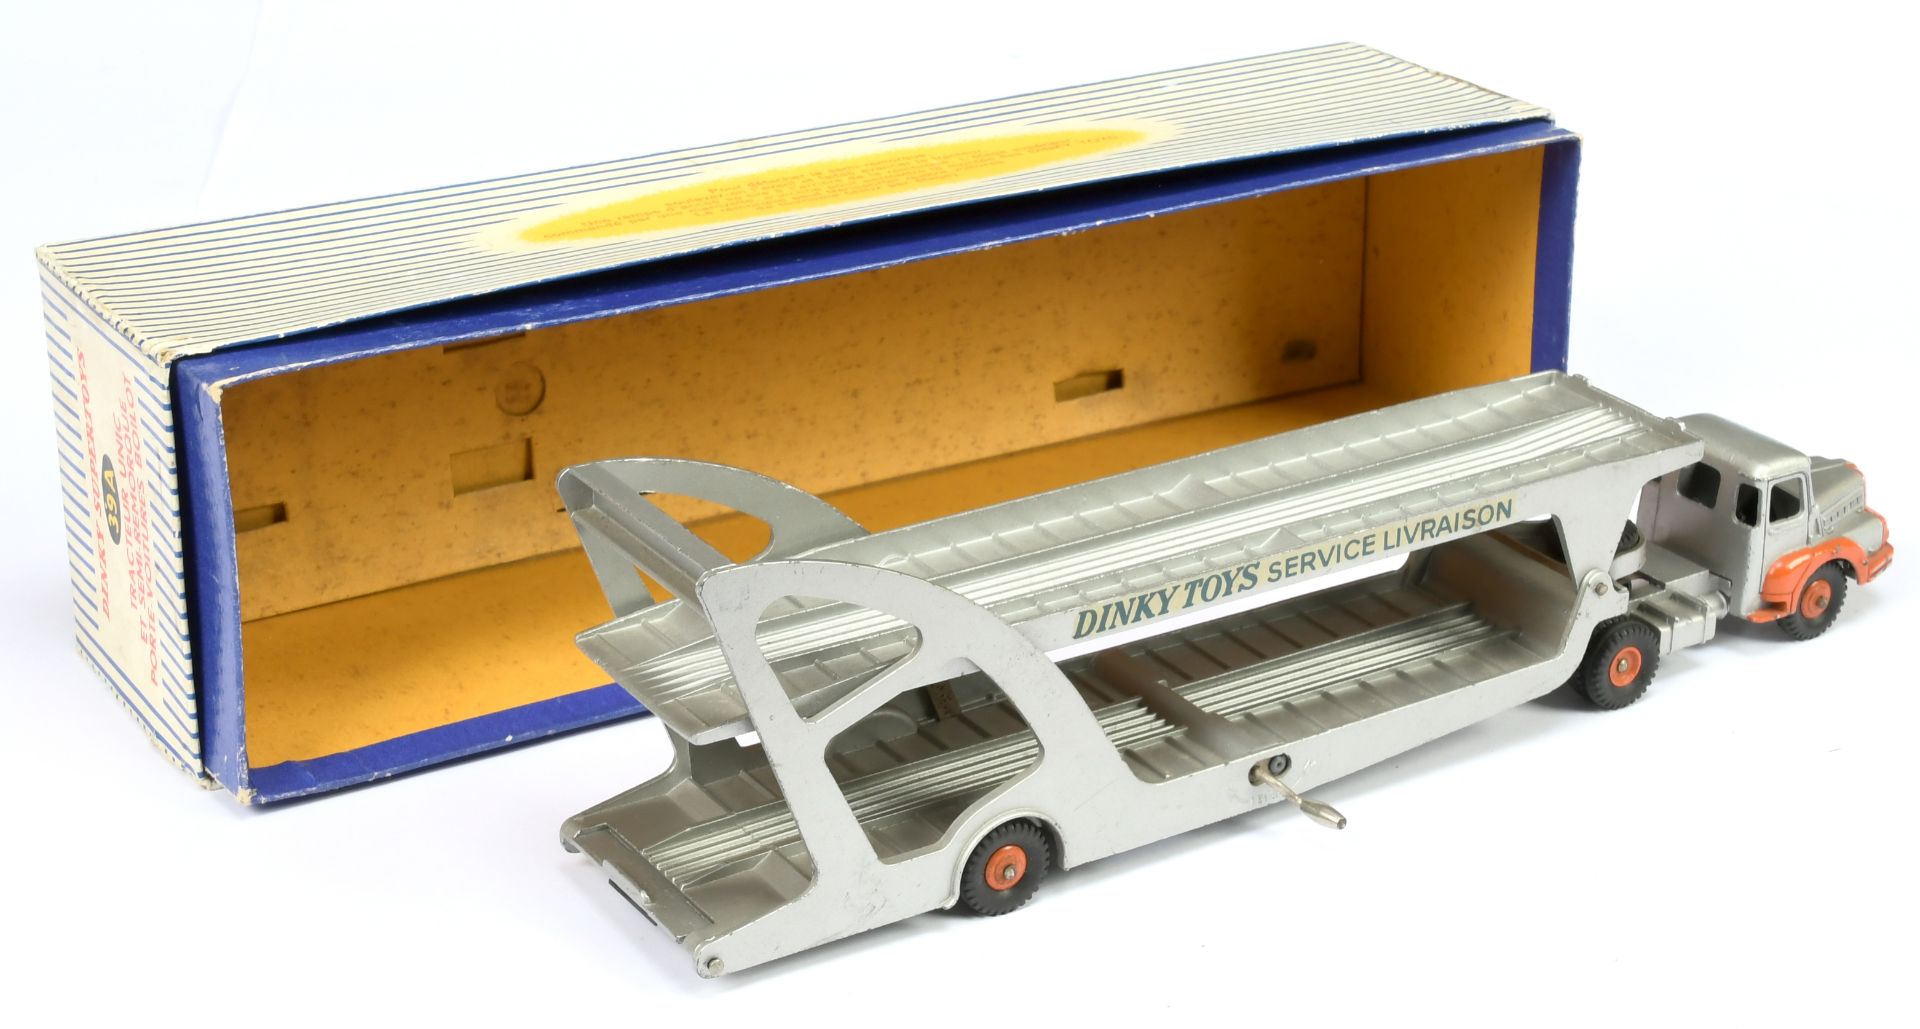 French Dinky Toys 39A Car Transporter "Dinky Toys Service Livraison" - Silver, orange including c... - Image 2 of 2